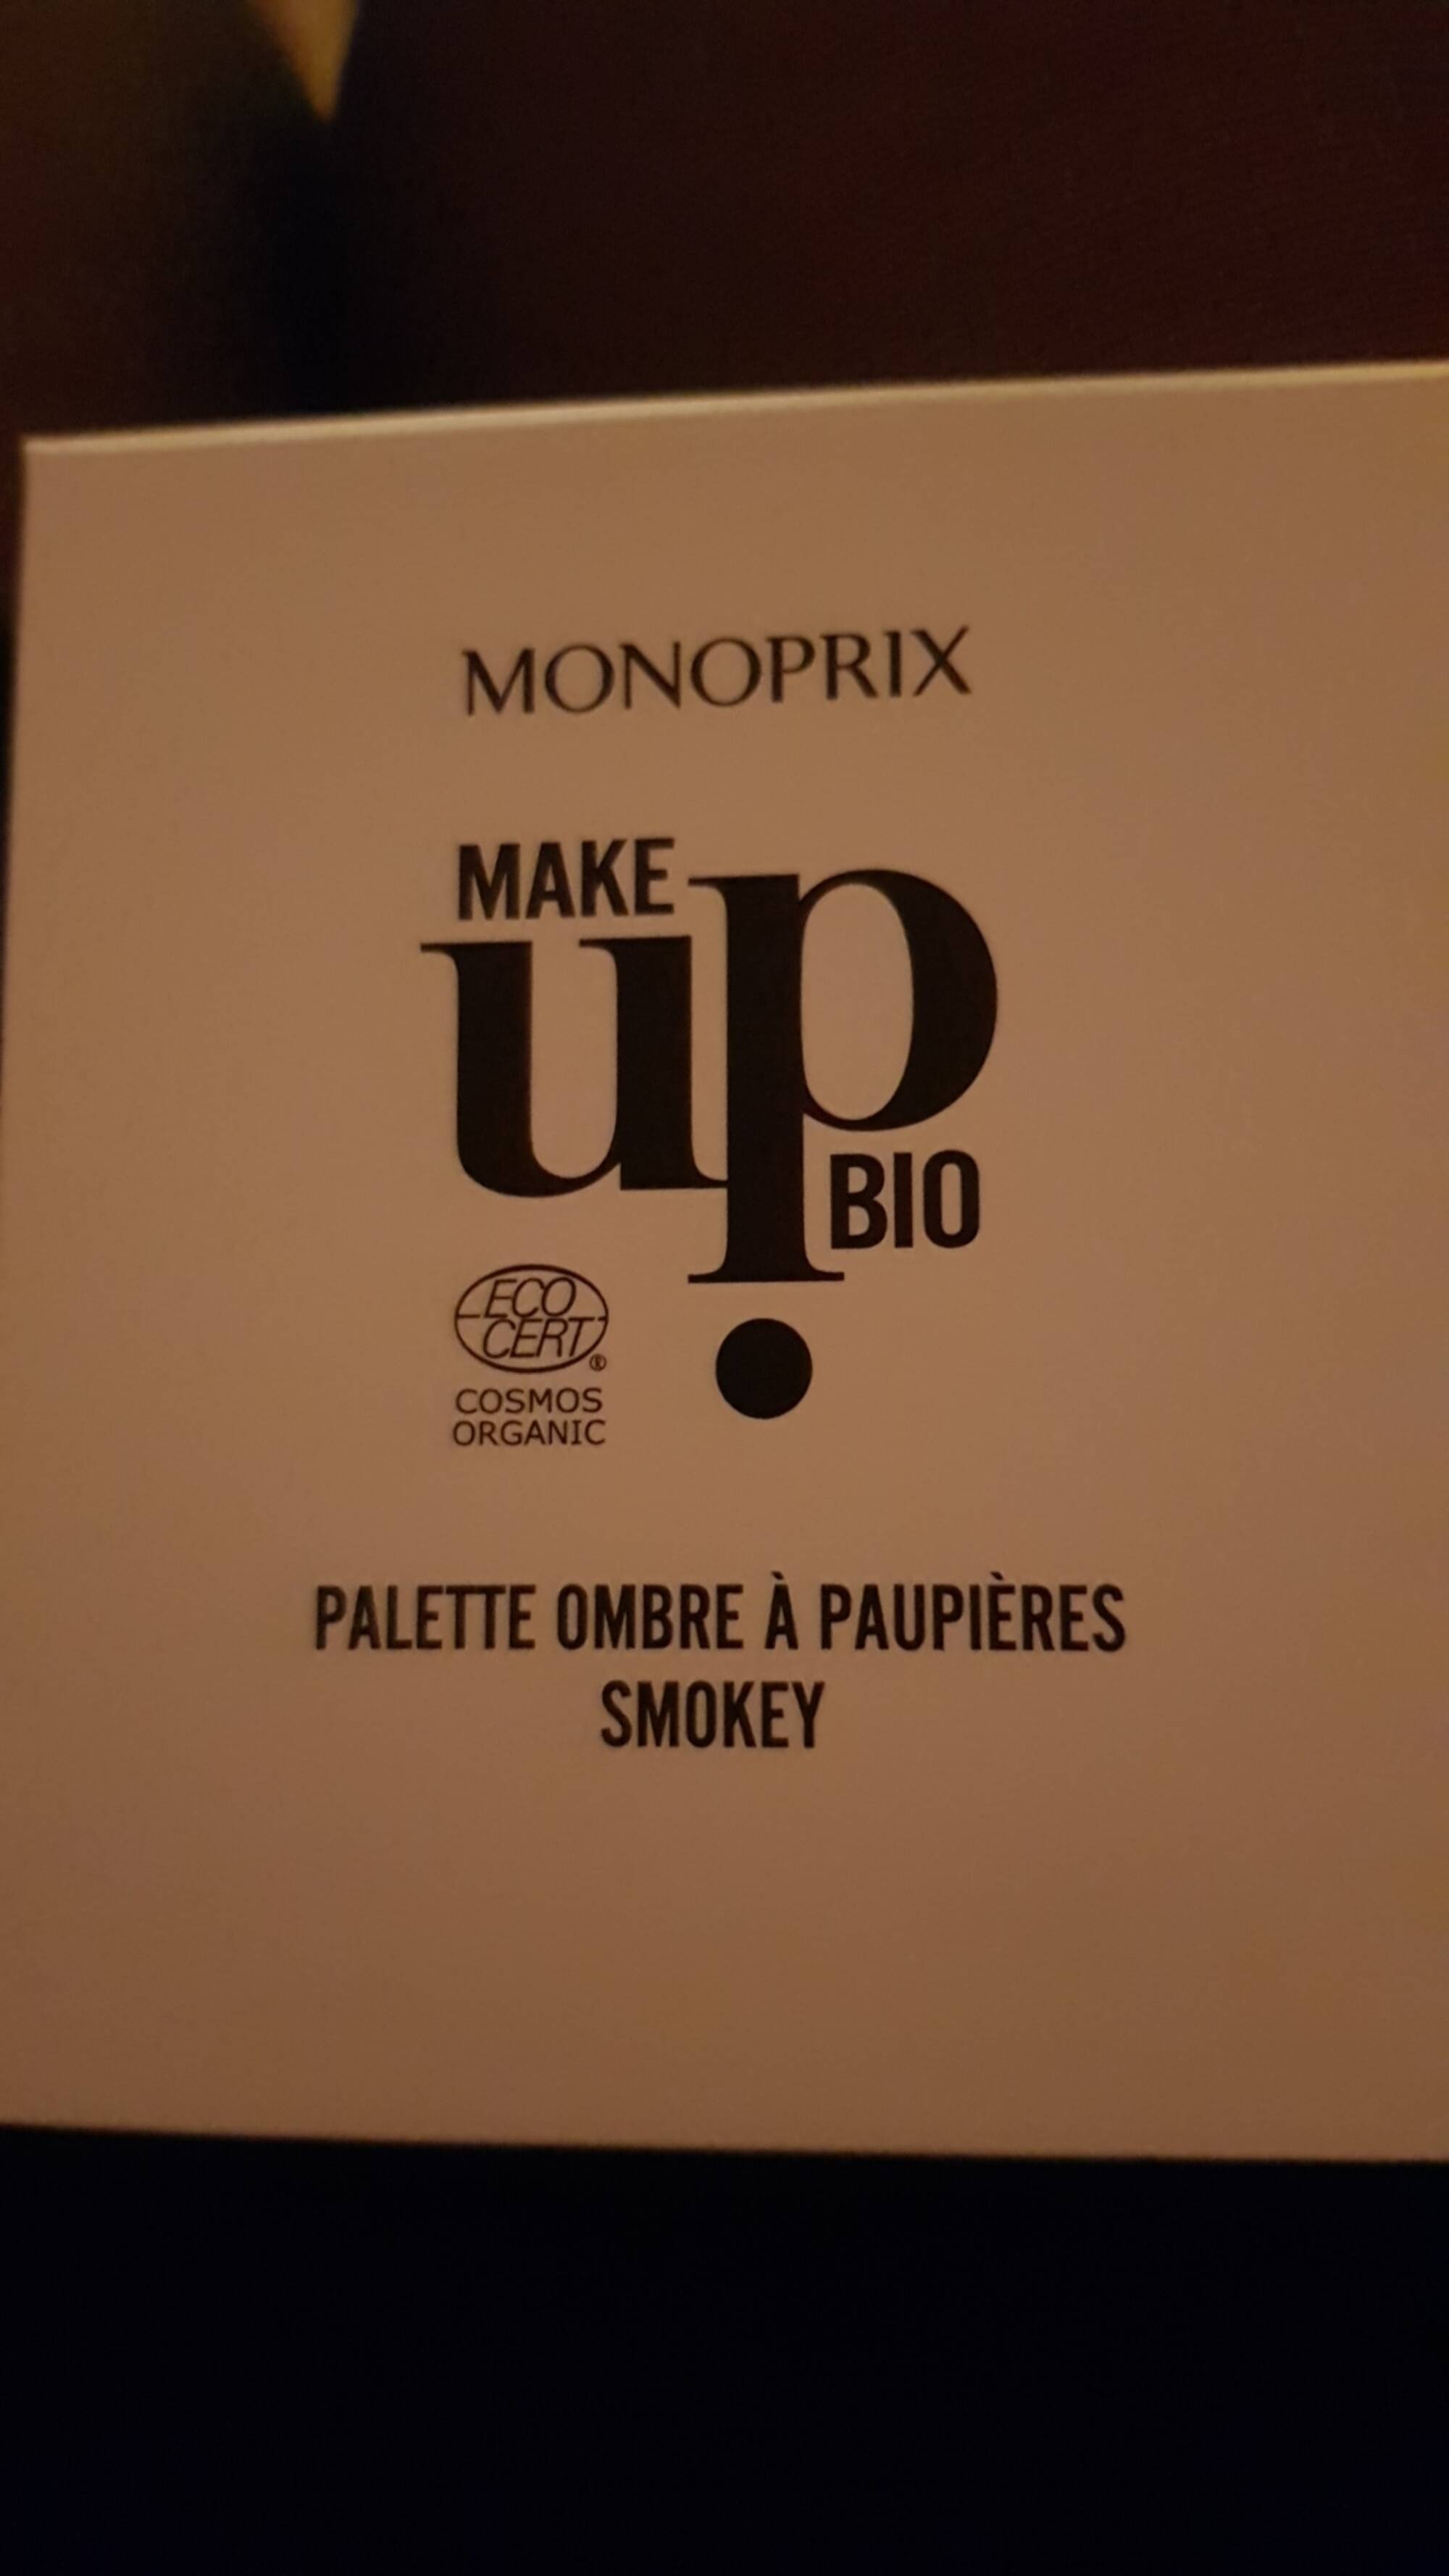 MONOPRIX - Make up Bio - Palette ombre à paupières smokey